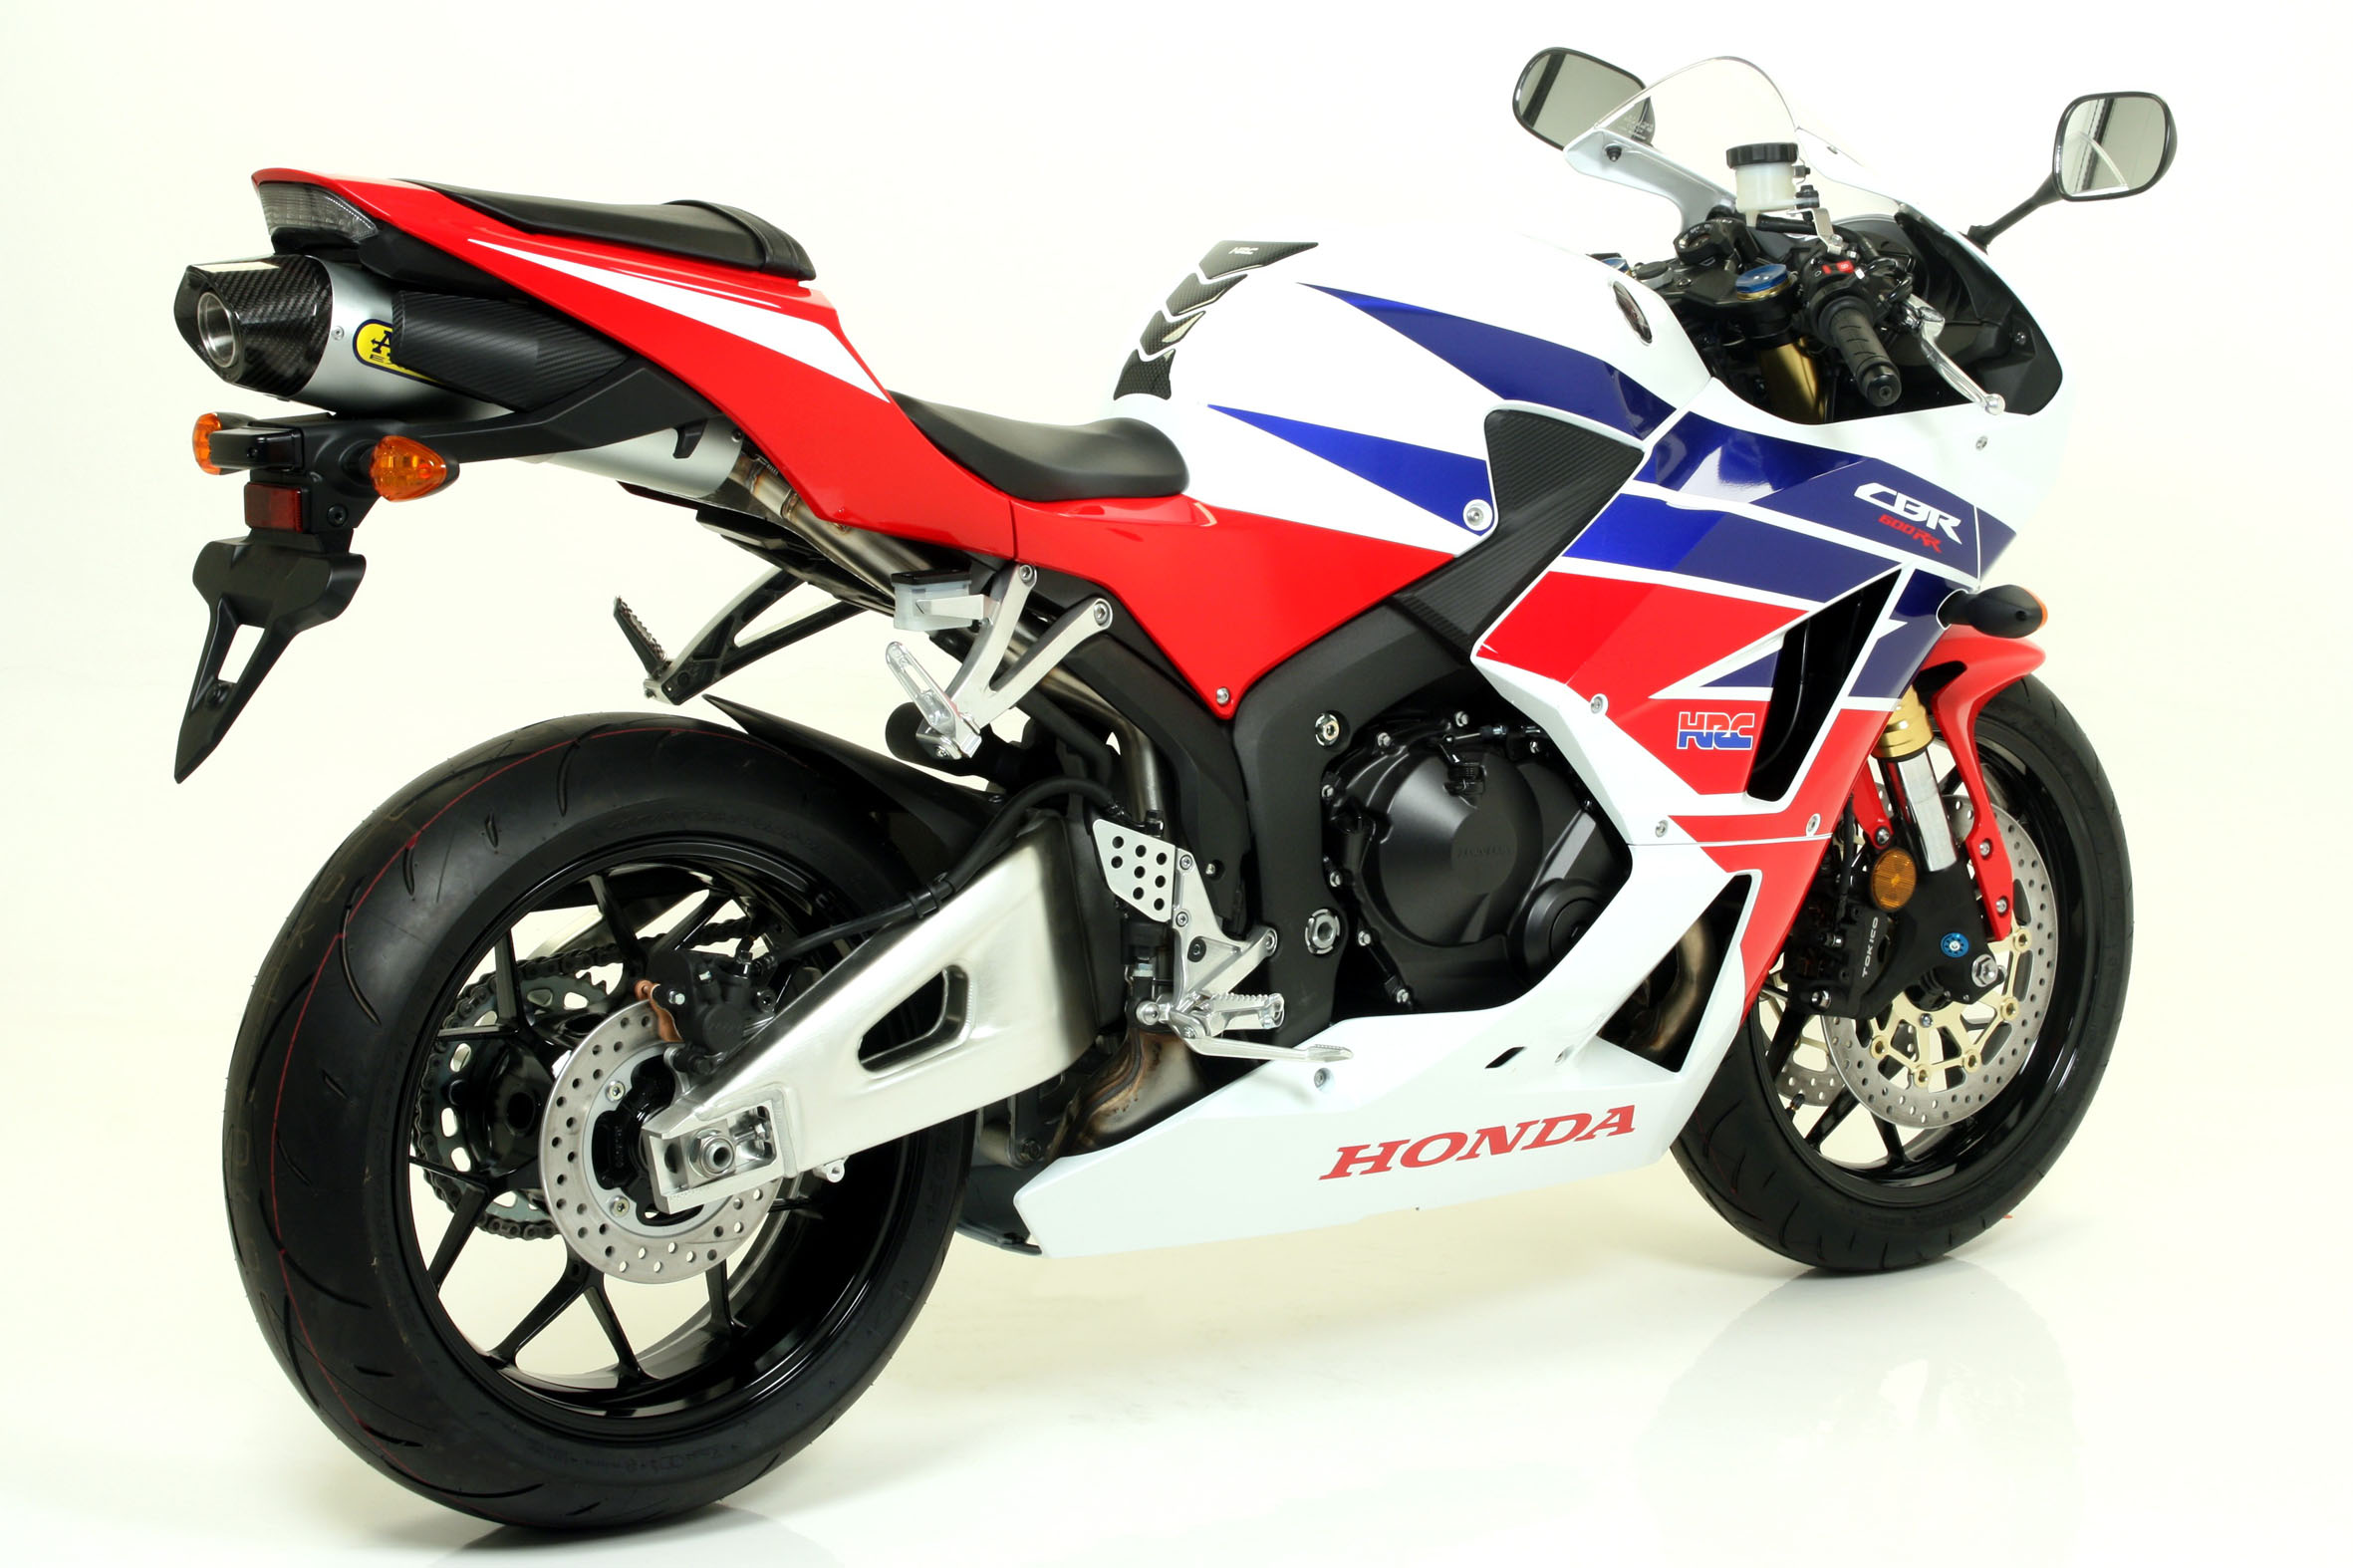 Honda Cbr600rr Motorcycle 2362x1574